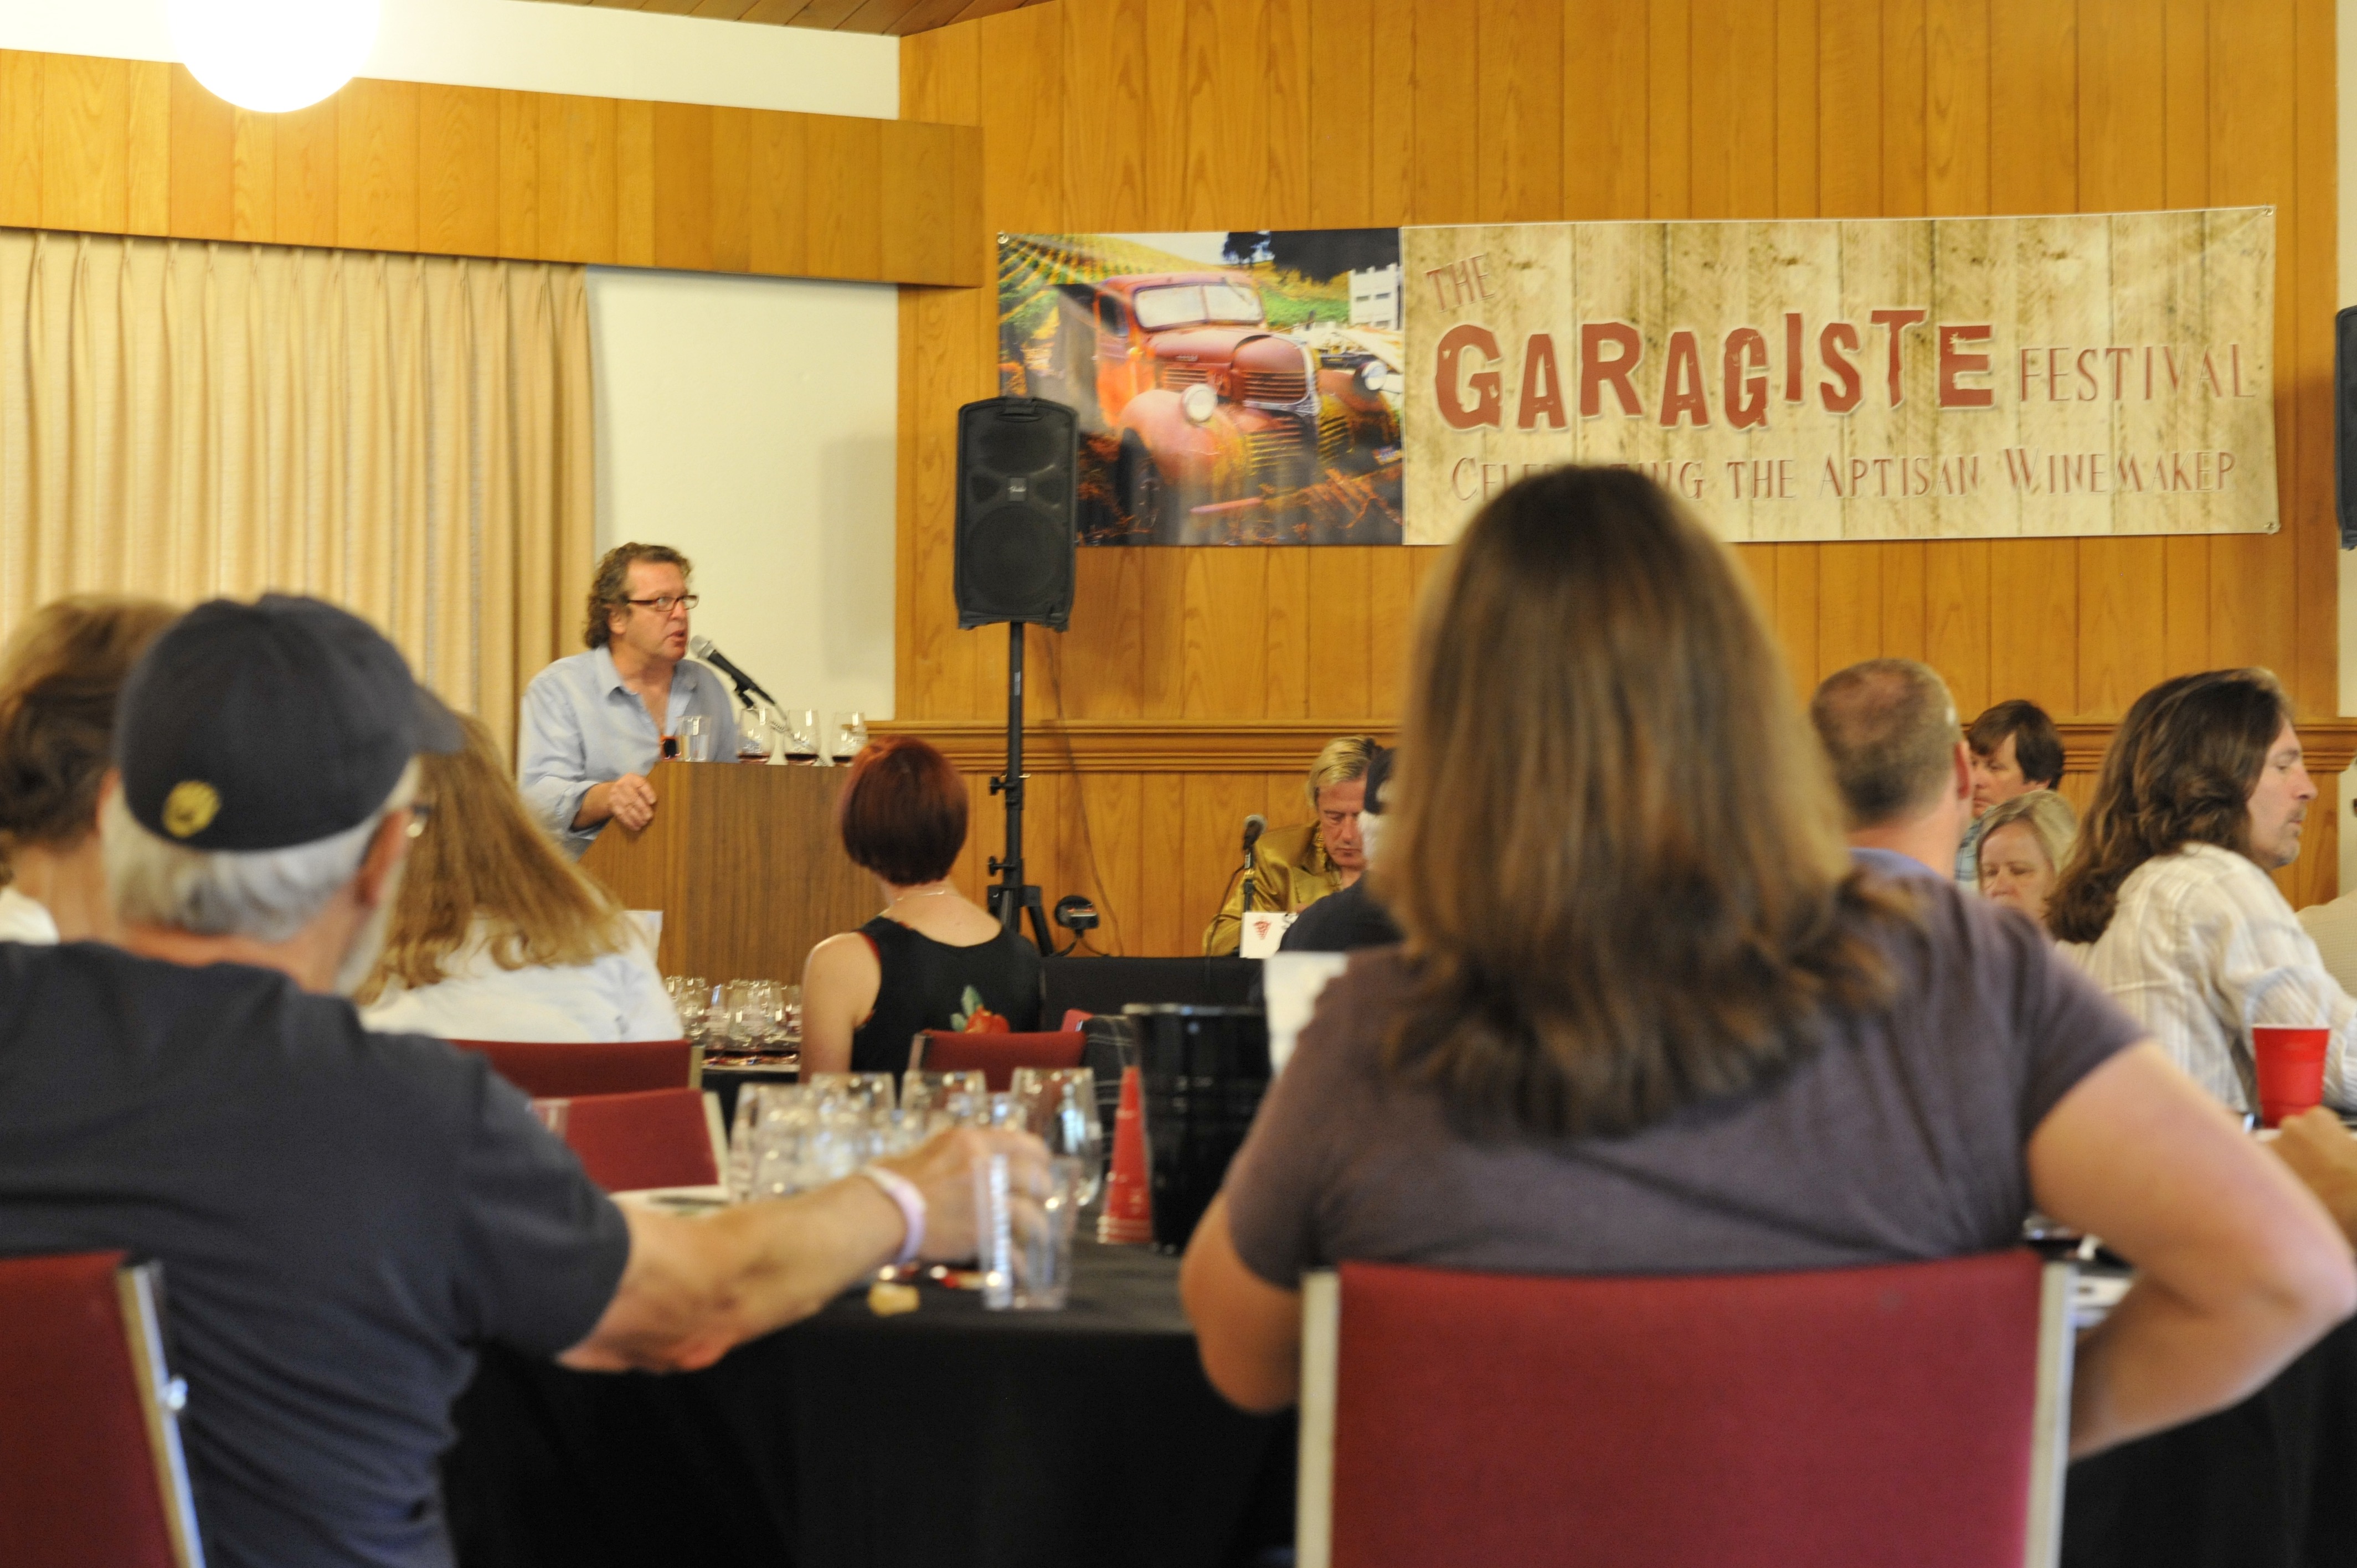 Stewart McLennan, Garagiste Festival Co-founder, moderating a festival wine tasting seminar